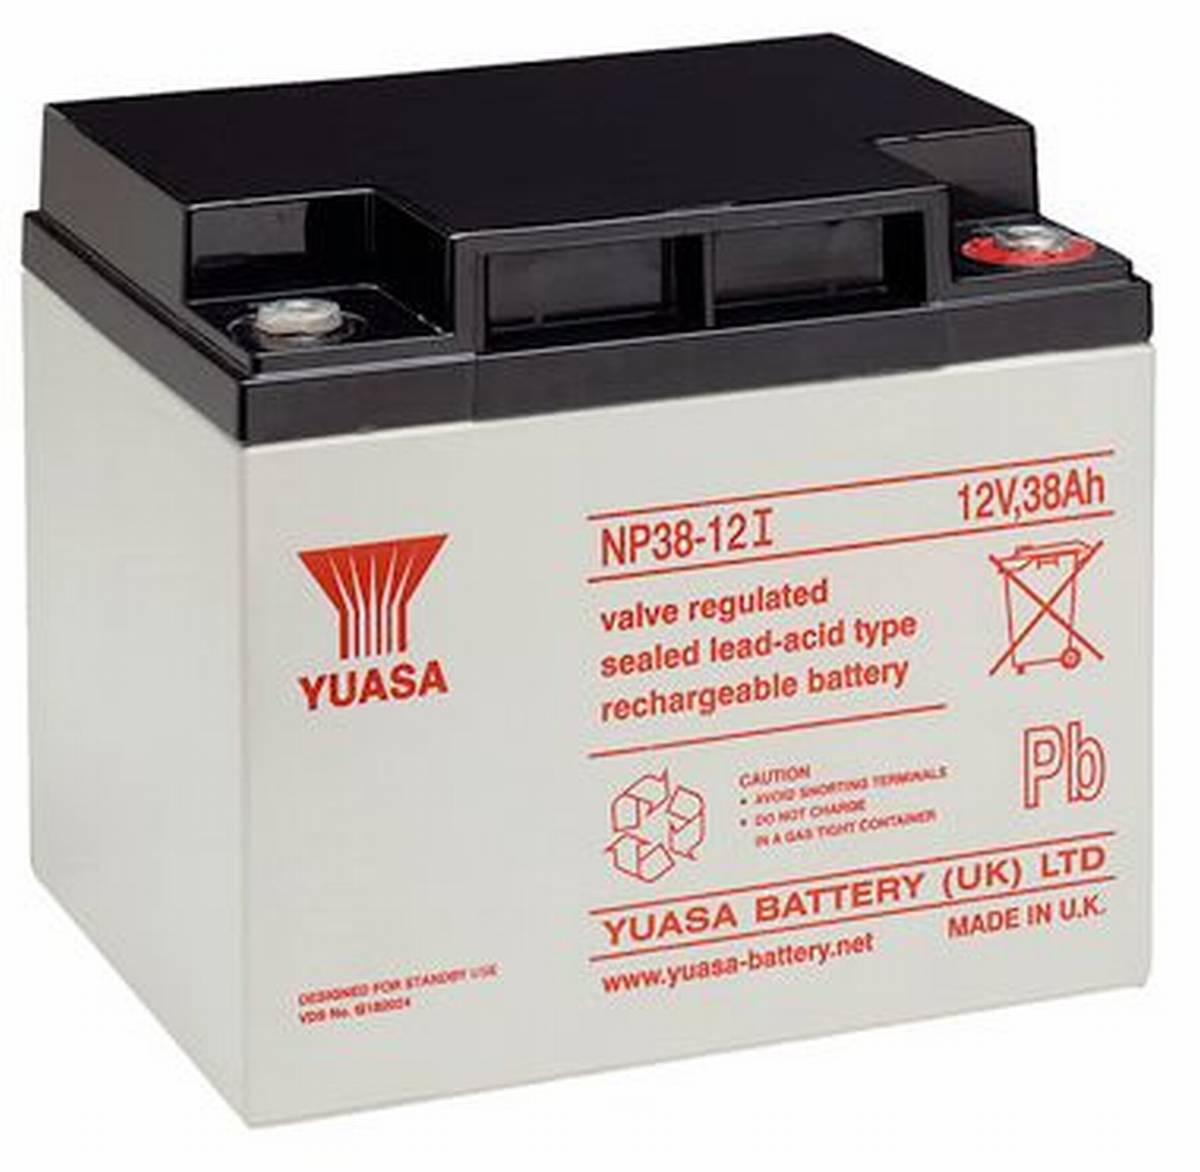 Yuasa NP38-12I 38Ah 12V Lead-Acid Battery / AGM NP 38-12 VdS